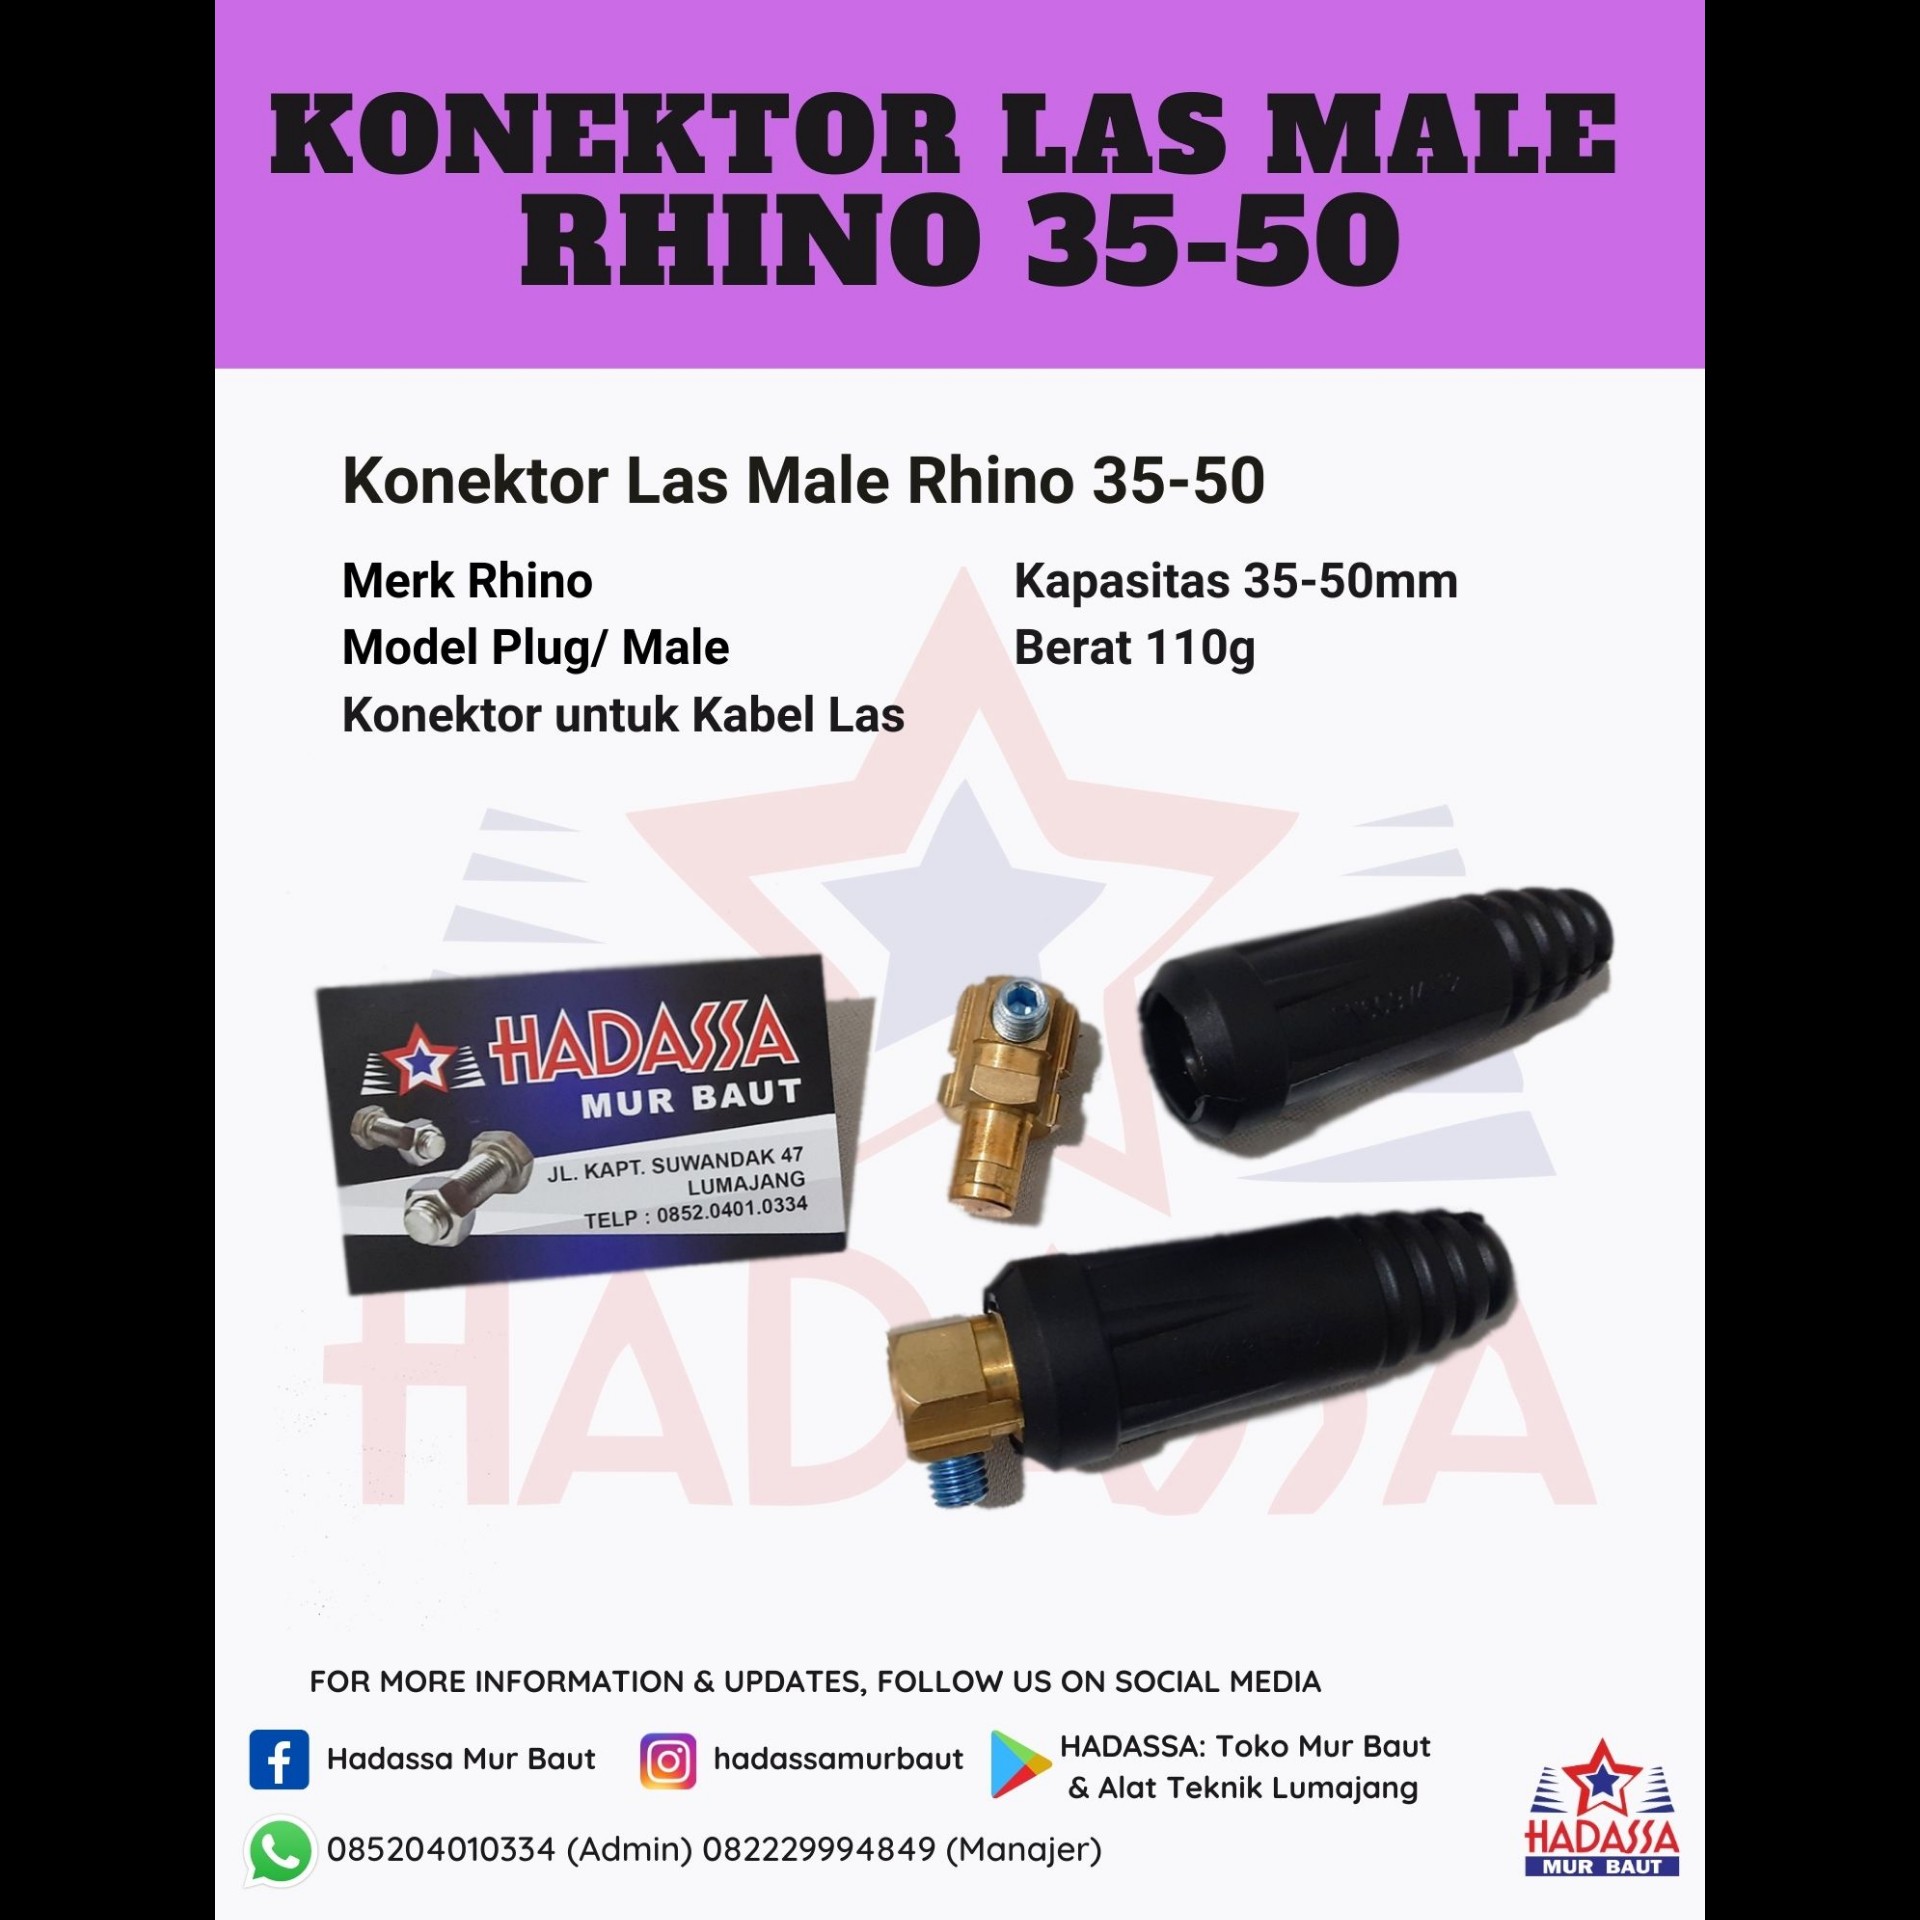 Konektor Las Male Rhino 35-50